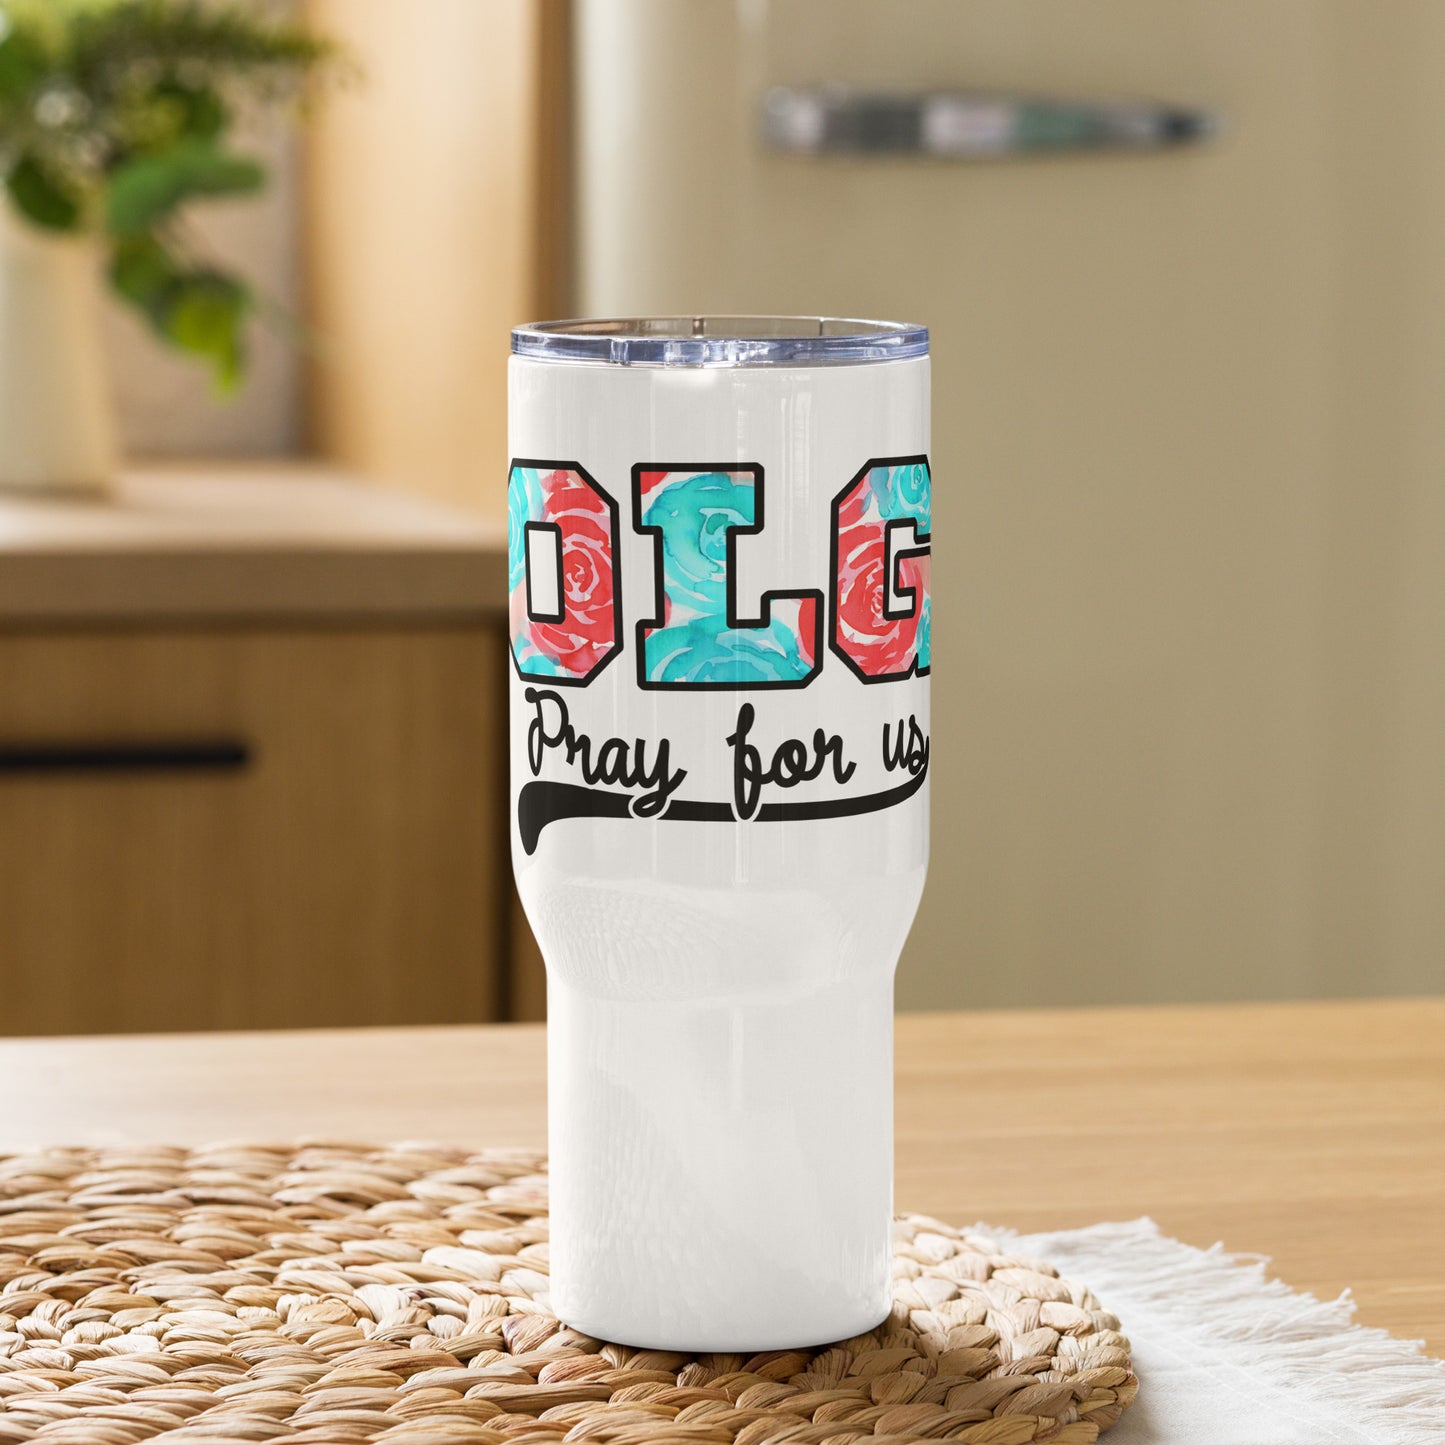 OLG Pray for Us - Travel mug with a handle